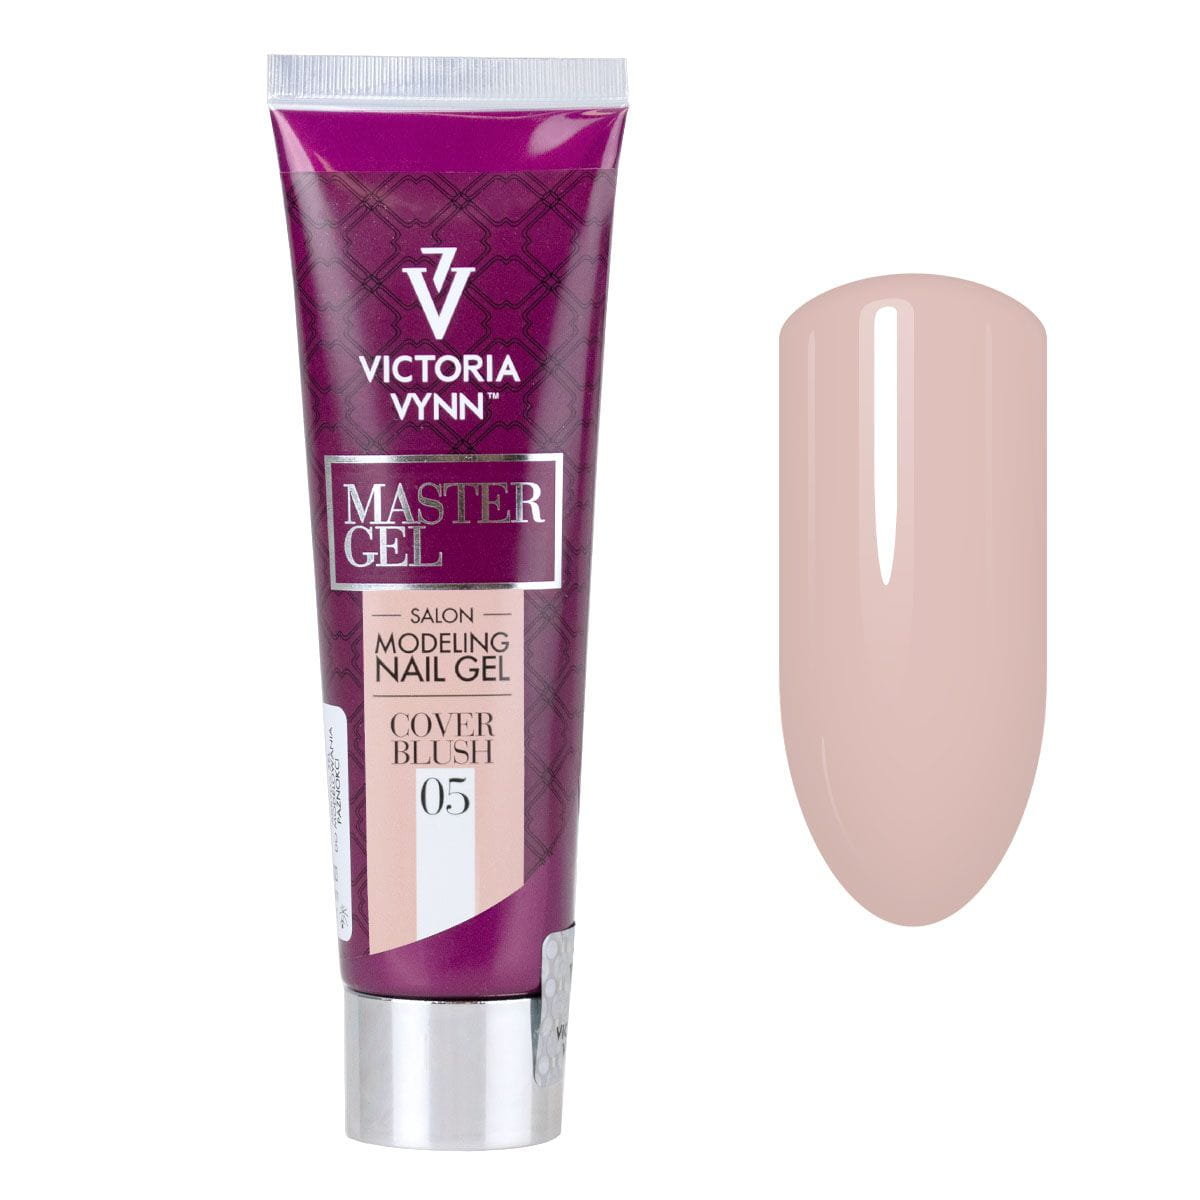 Victoria Vynn Master Gel Cover Blush VICTORIA VYNN - 60 g 330550